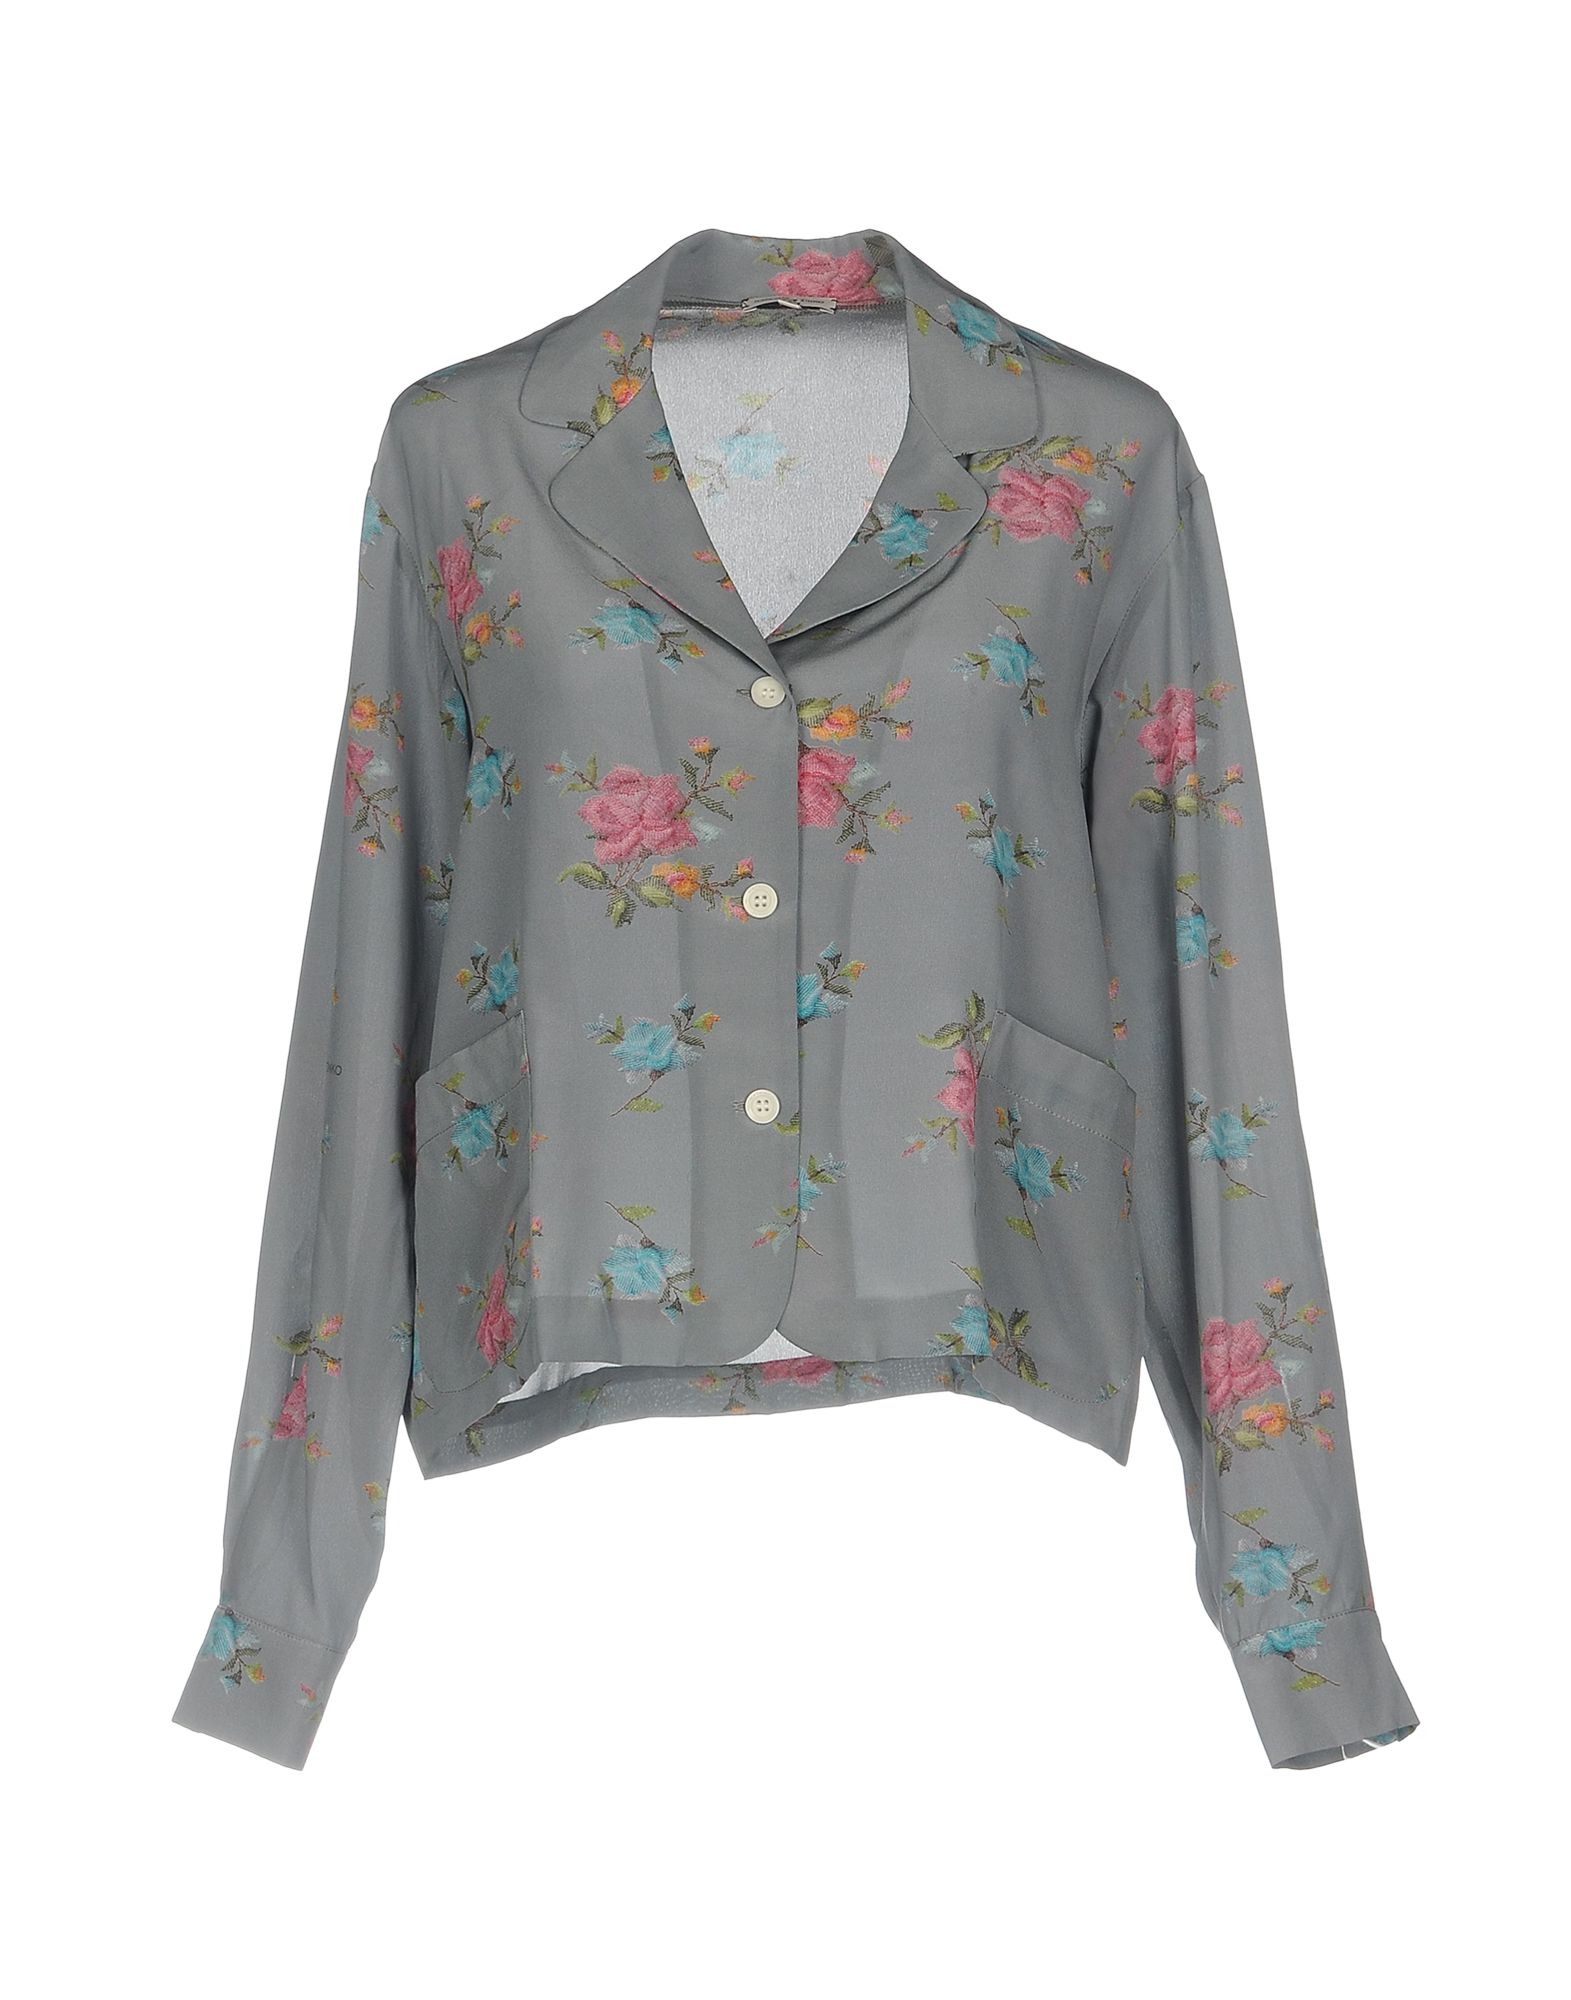 NATASHA ZINKO Floral shirts & blouses,38706375SE 5